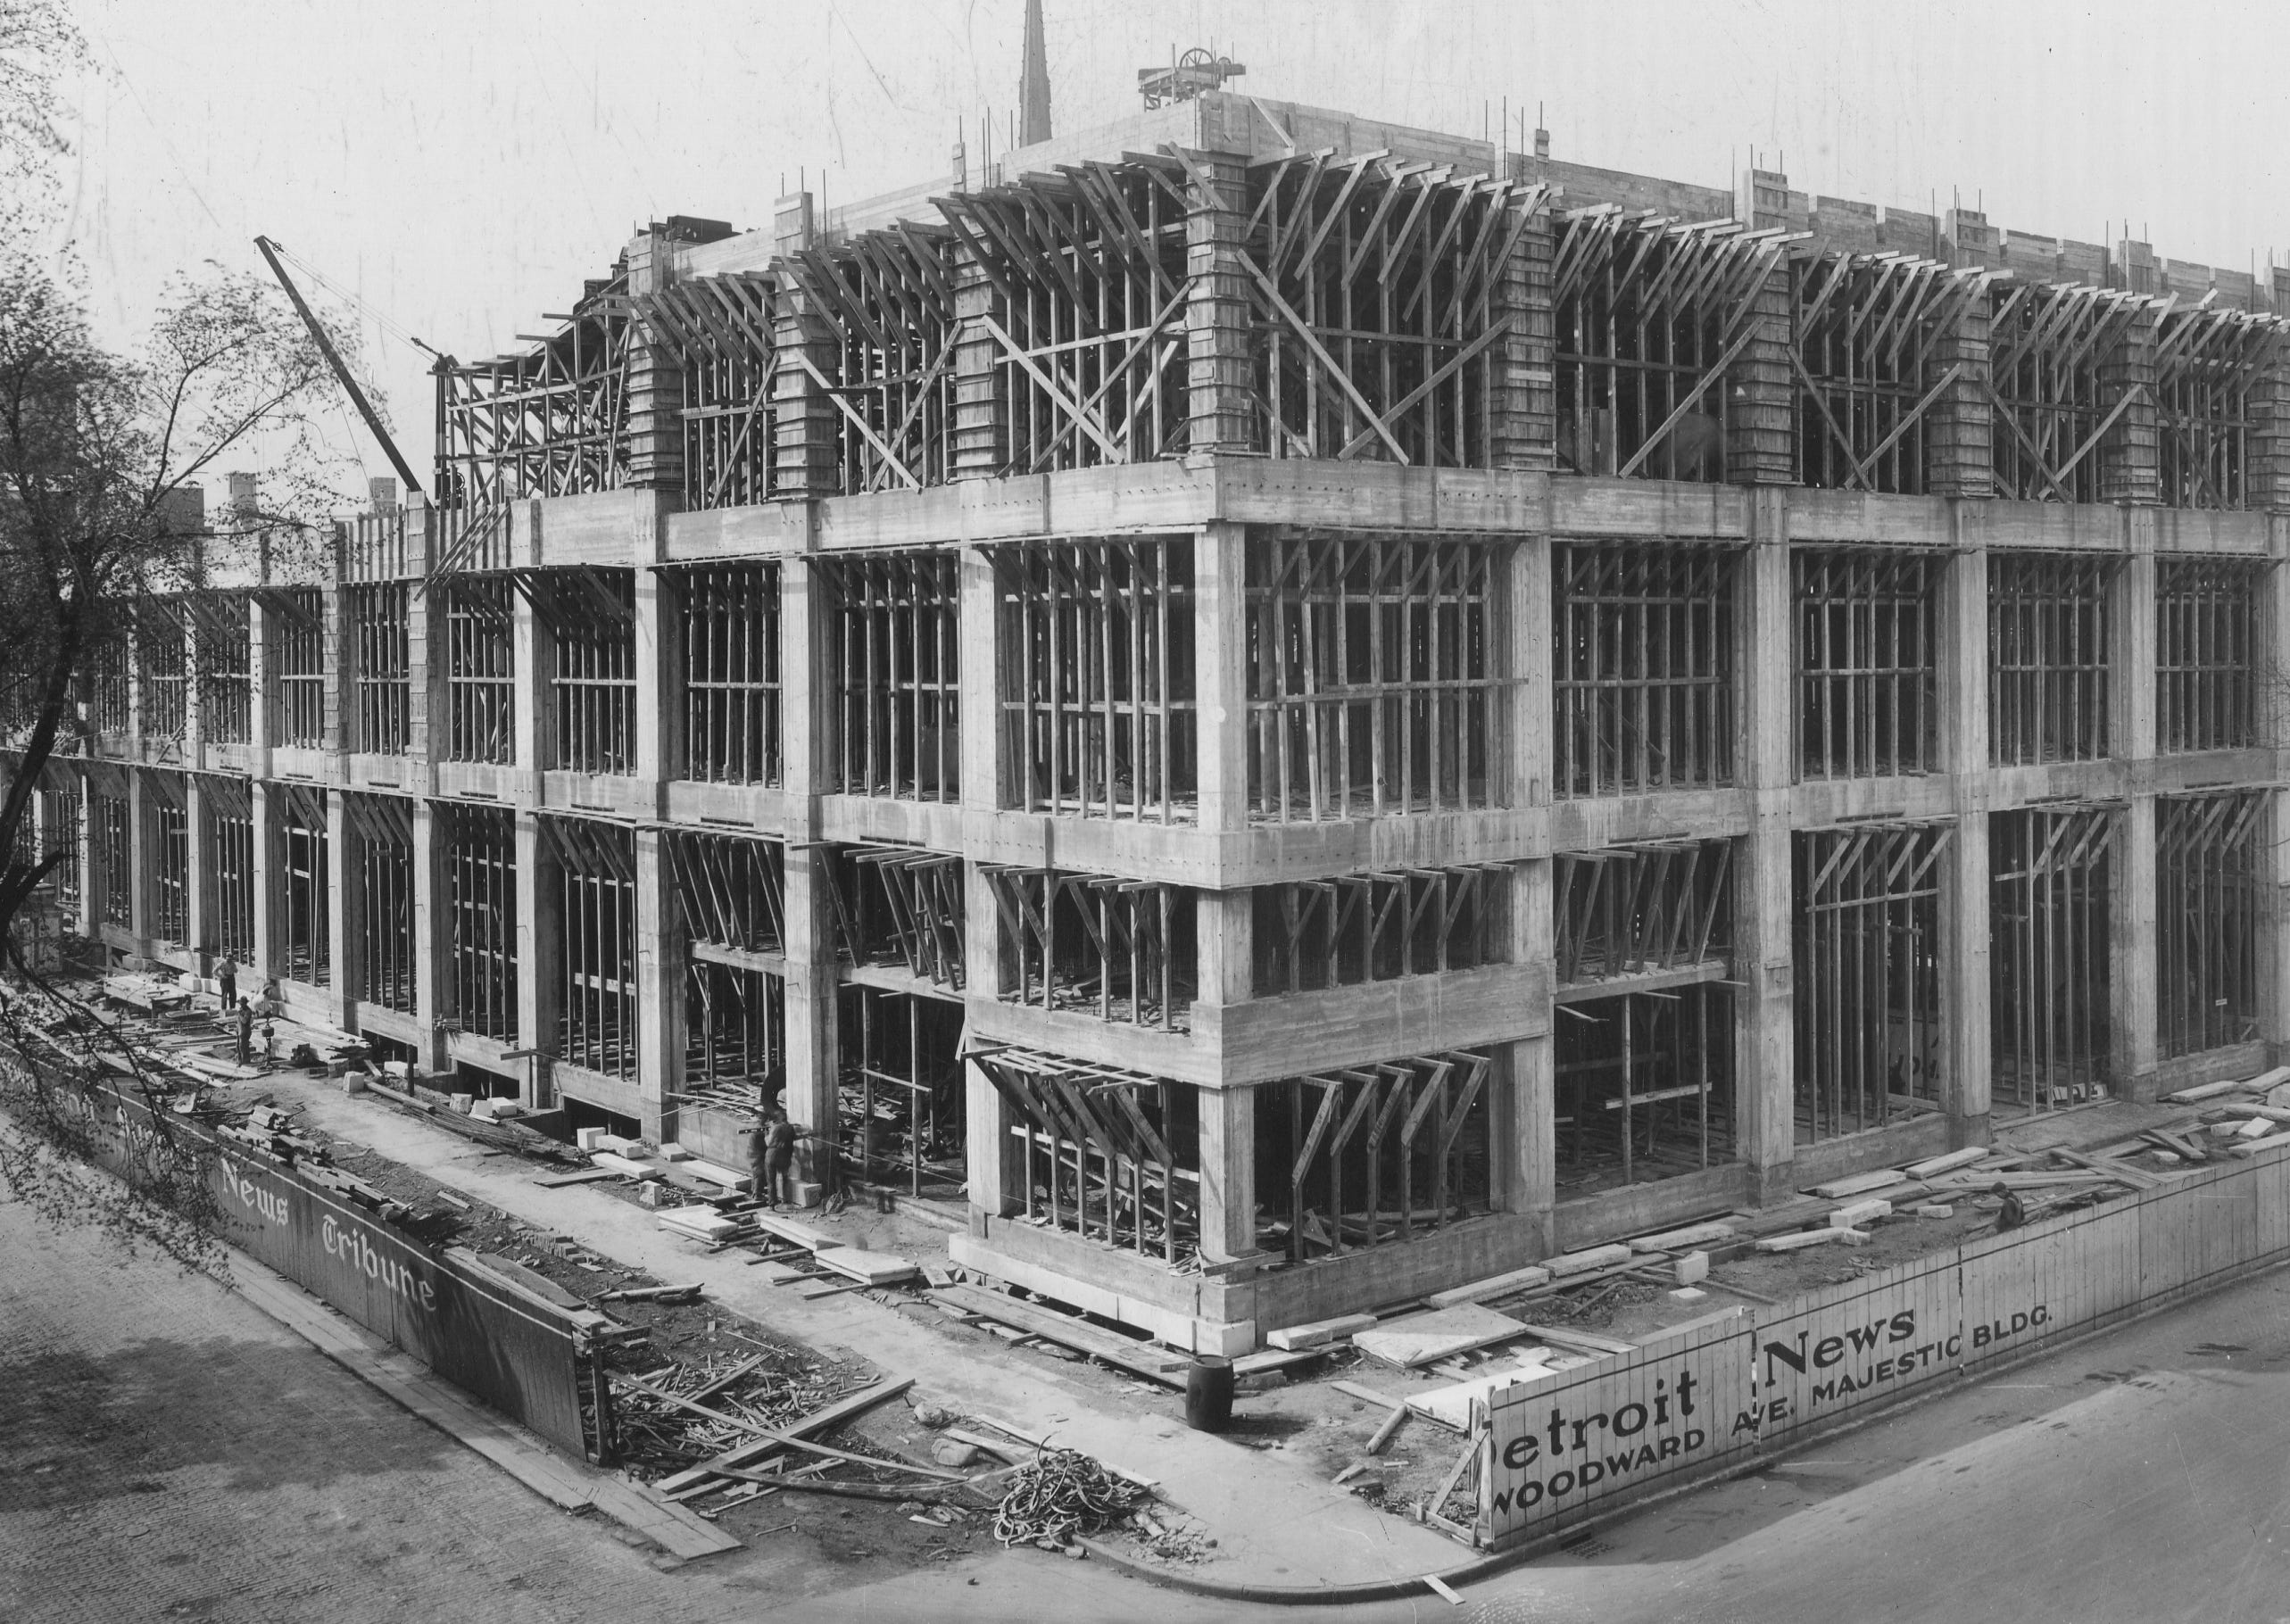 The Detroit News building is shown under construction at 615 W. Lafayette Boulevard.